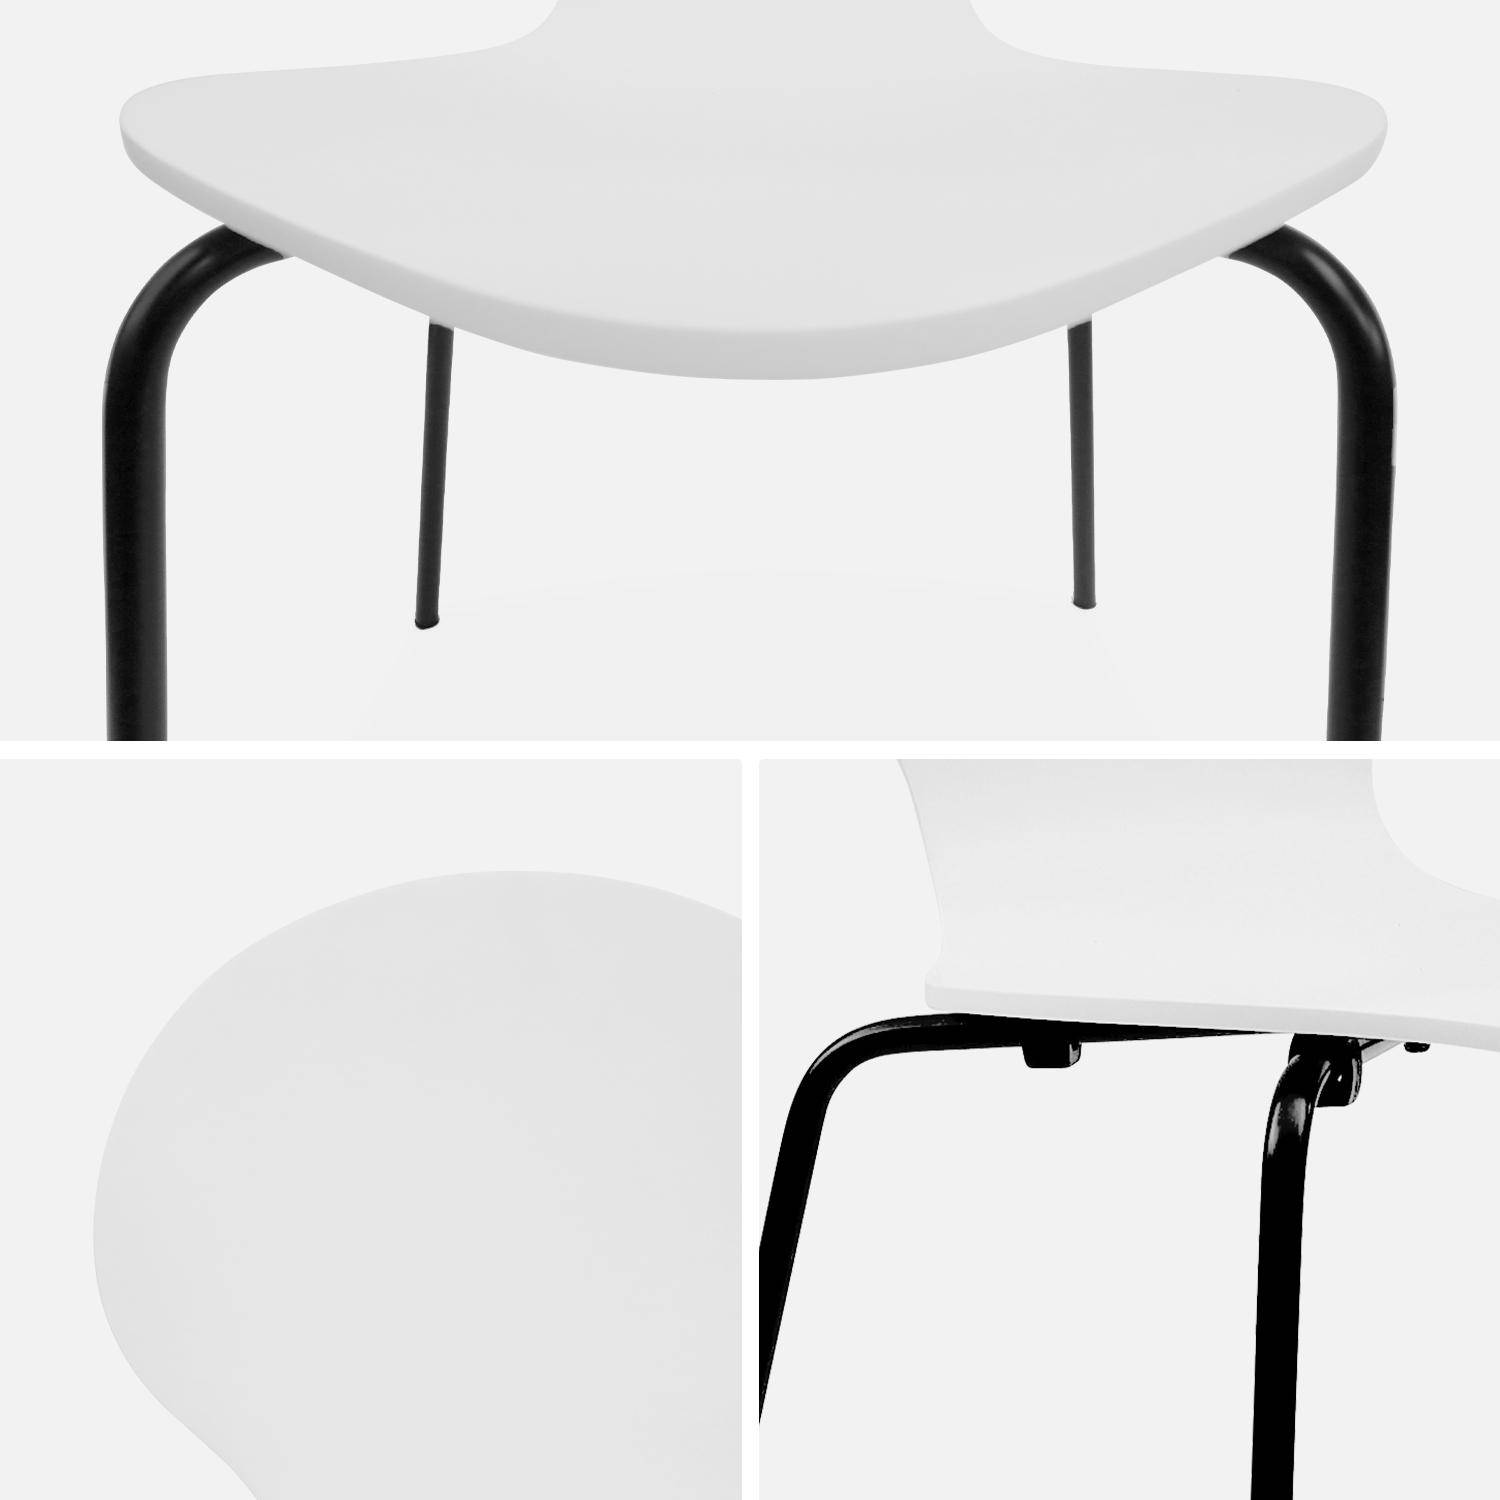 4er Set weiße stapelbare Retro-Stühle, Hevea-Holz und Sperrholz, Stahlbeine, Naomi, B 43 x T 48 x H 87cm Photo7